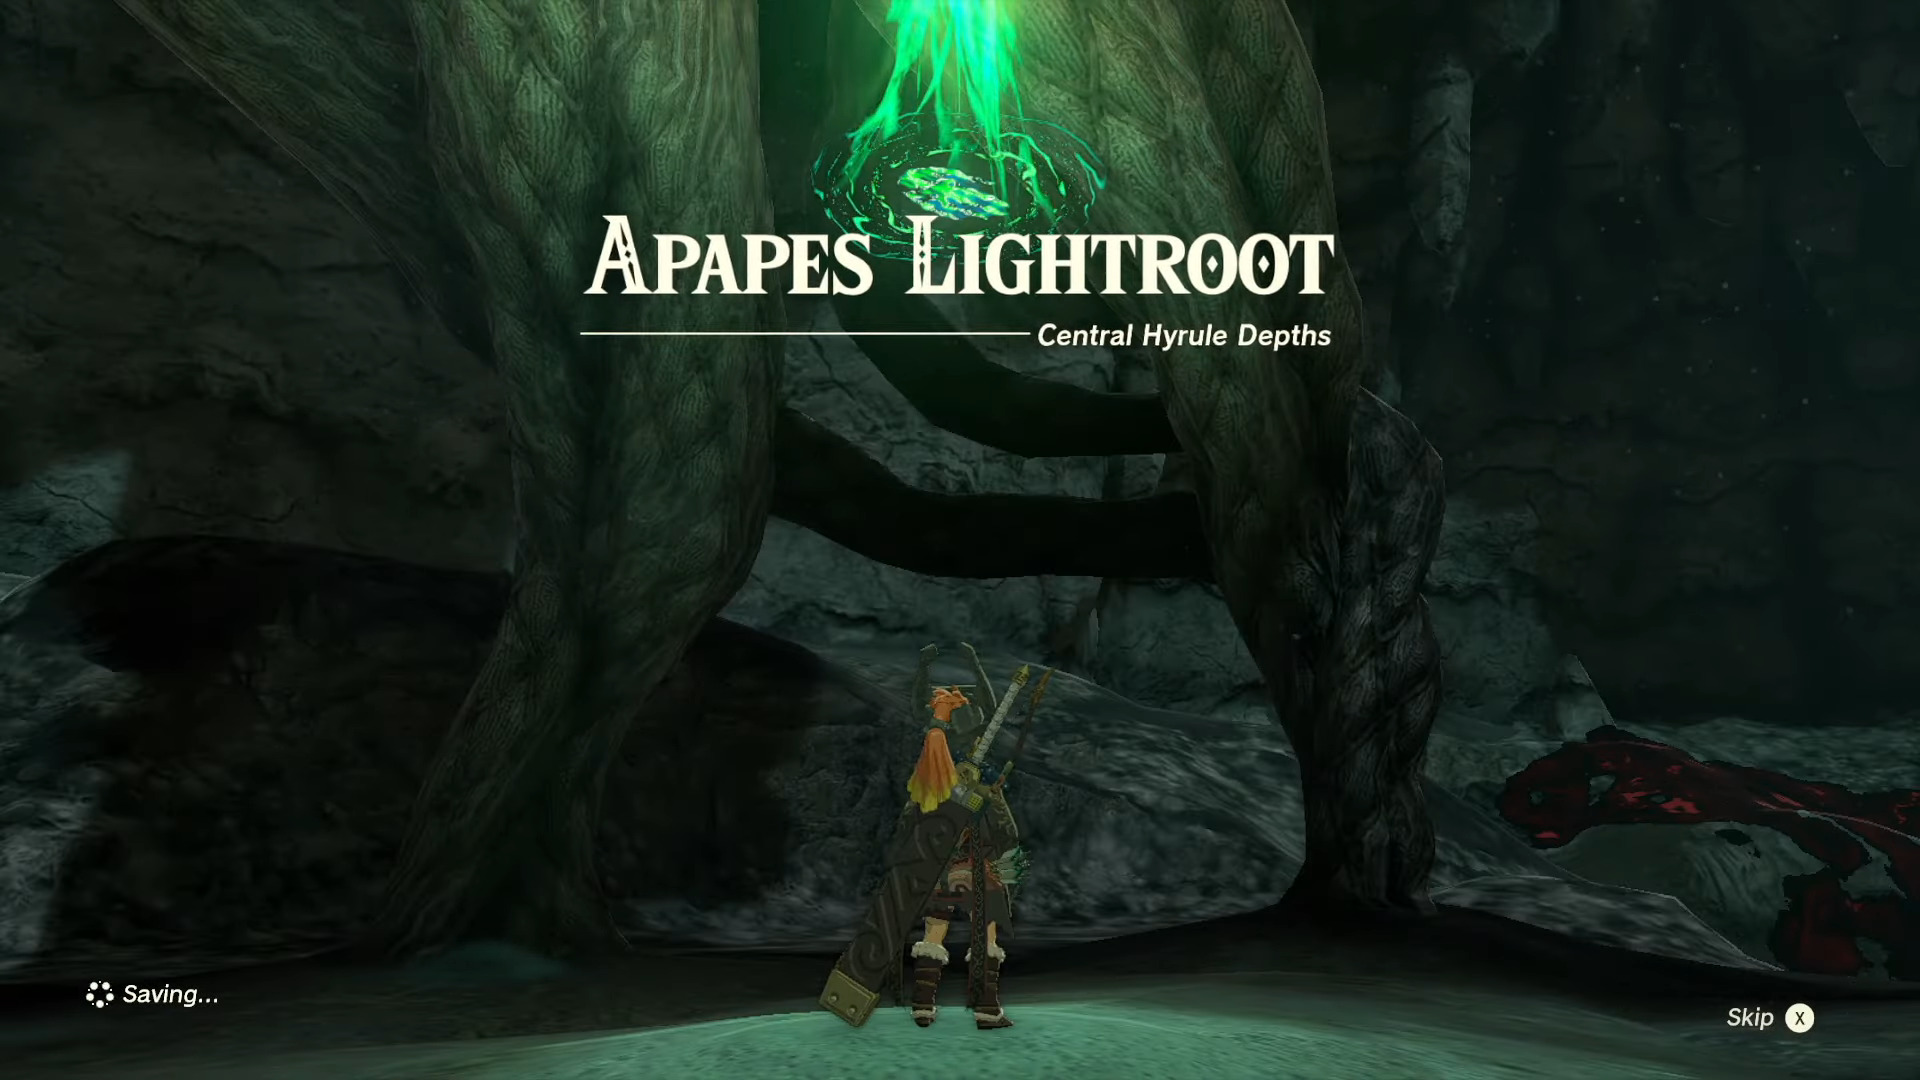 Link stood under Apapes Lightroot in Tears of the Kingdom